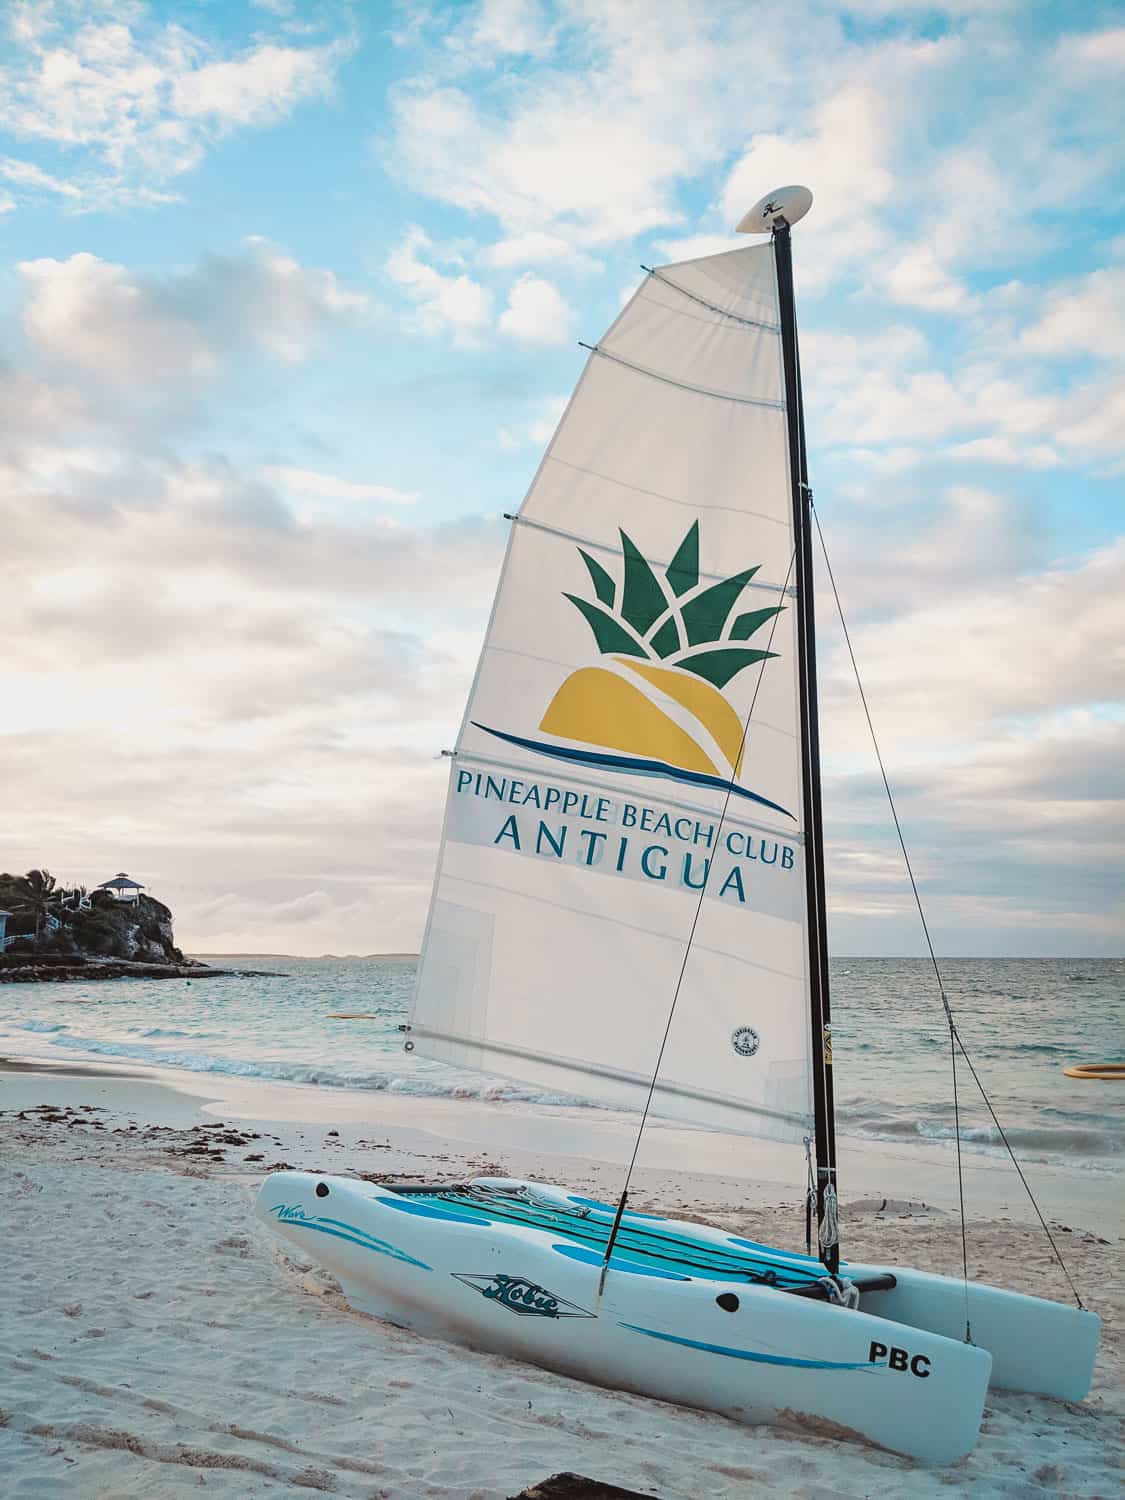 Pineapple Beach Club windsail on Antigua Island.